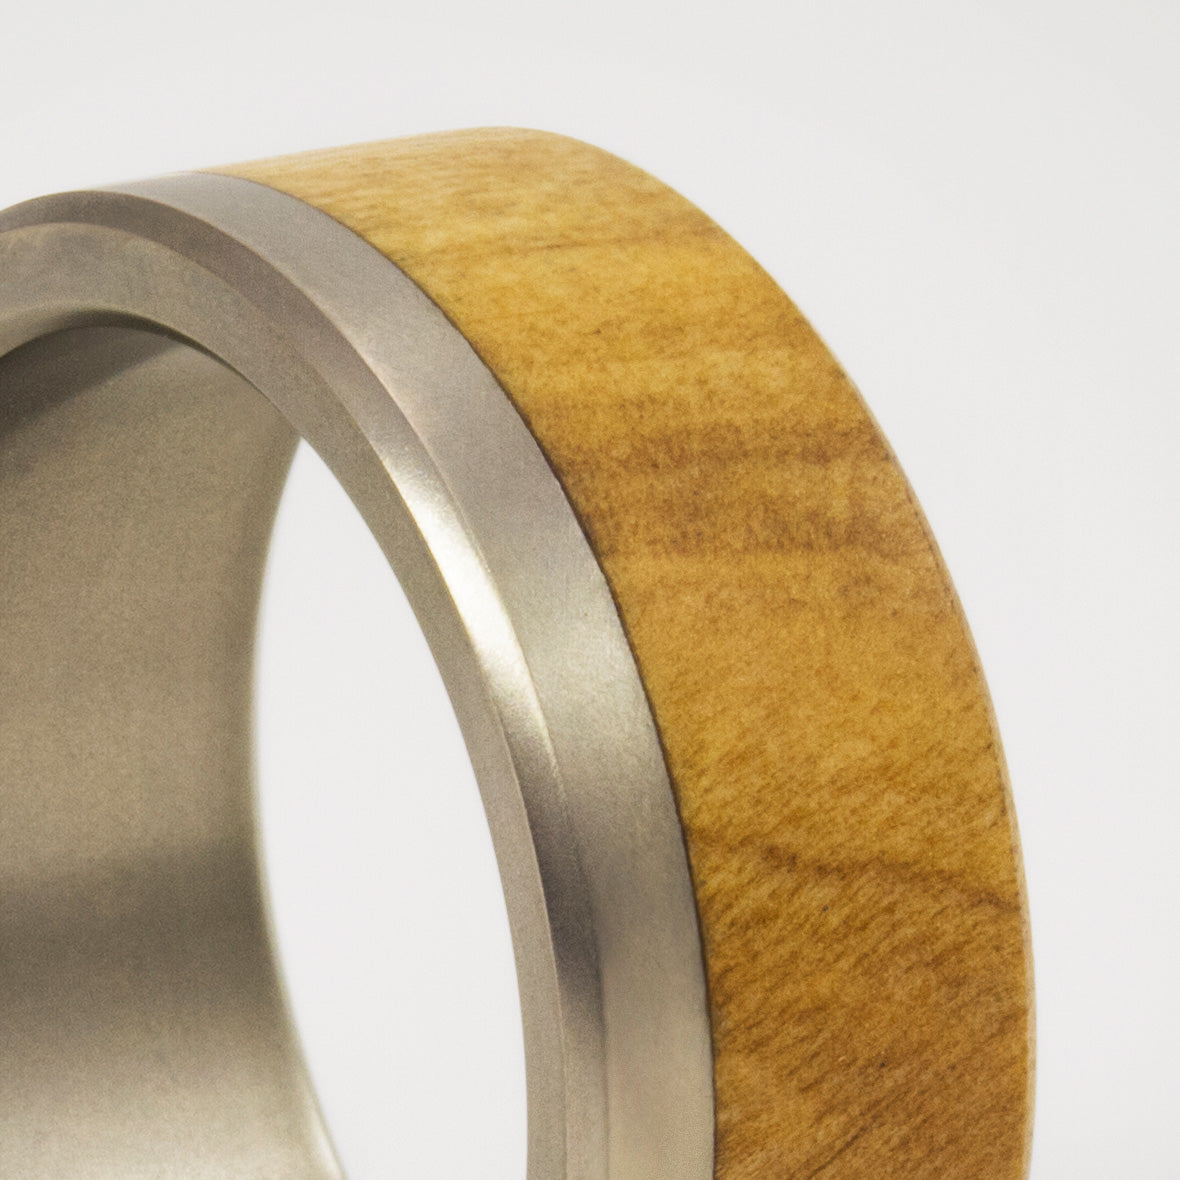 olive wood and matte titanium ring